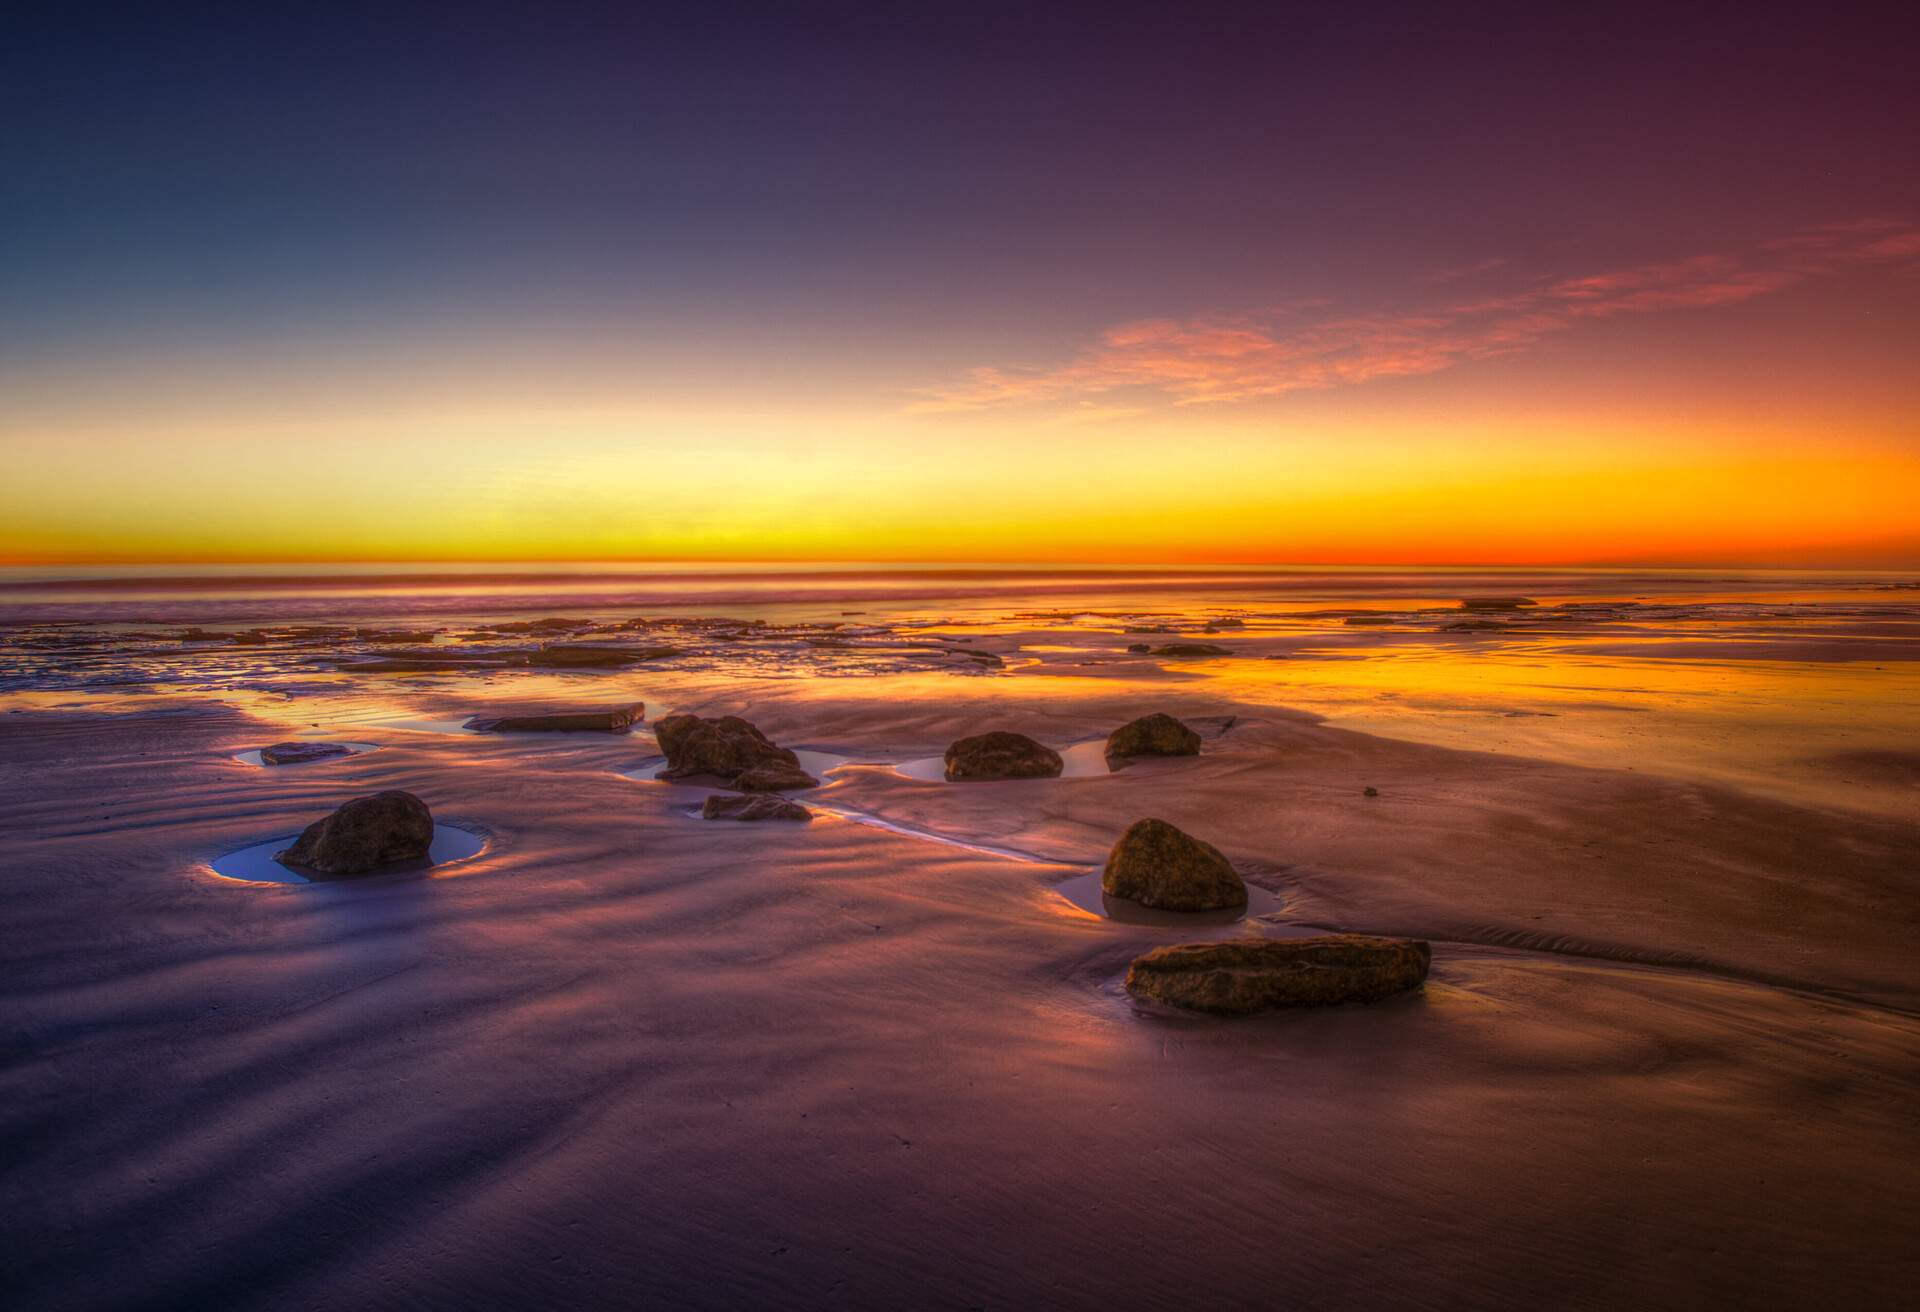 Western Australia's famous Cable Beach, low tide sunset.